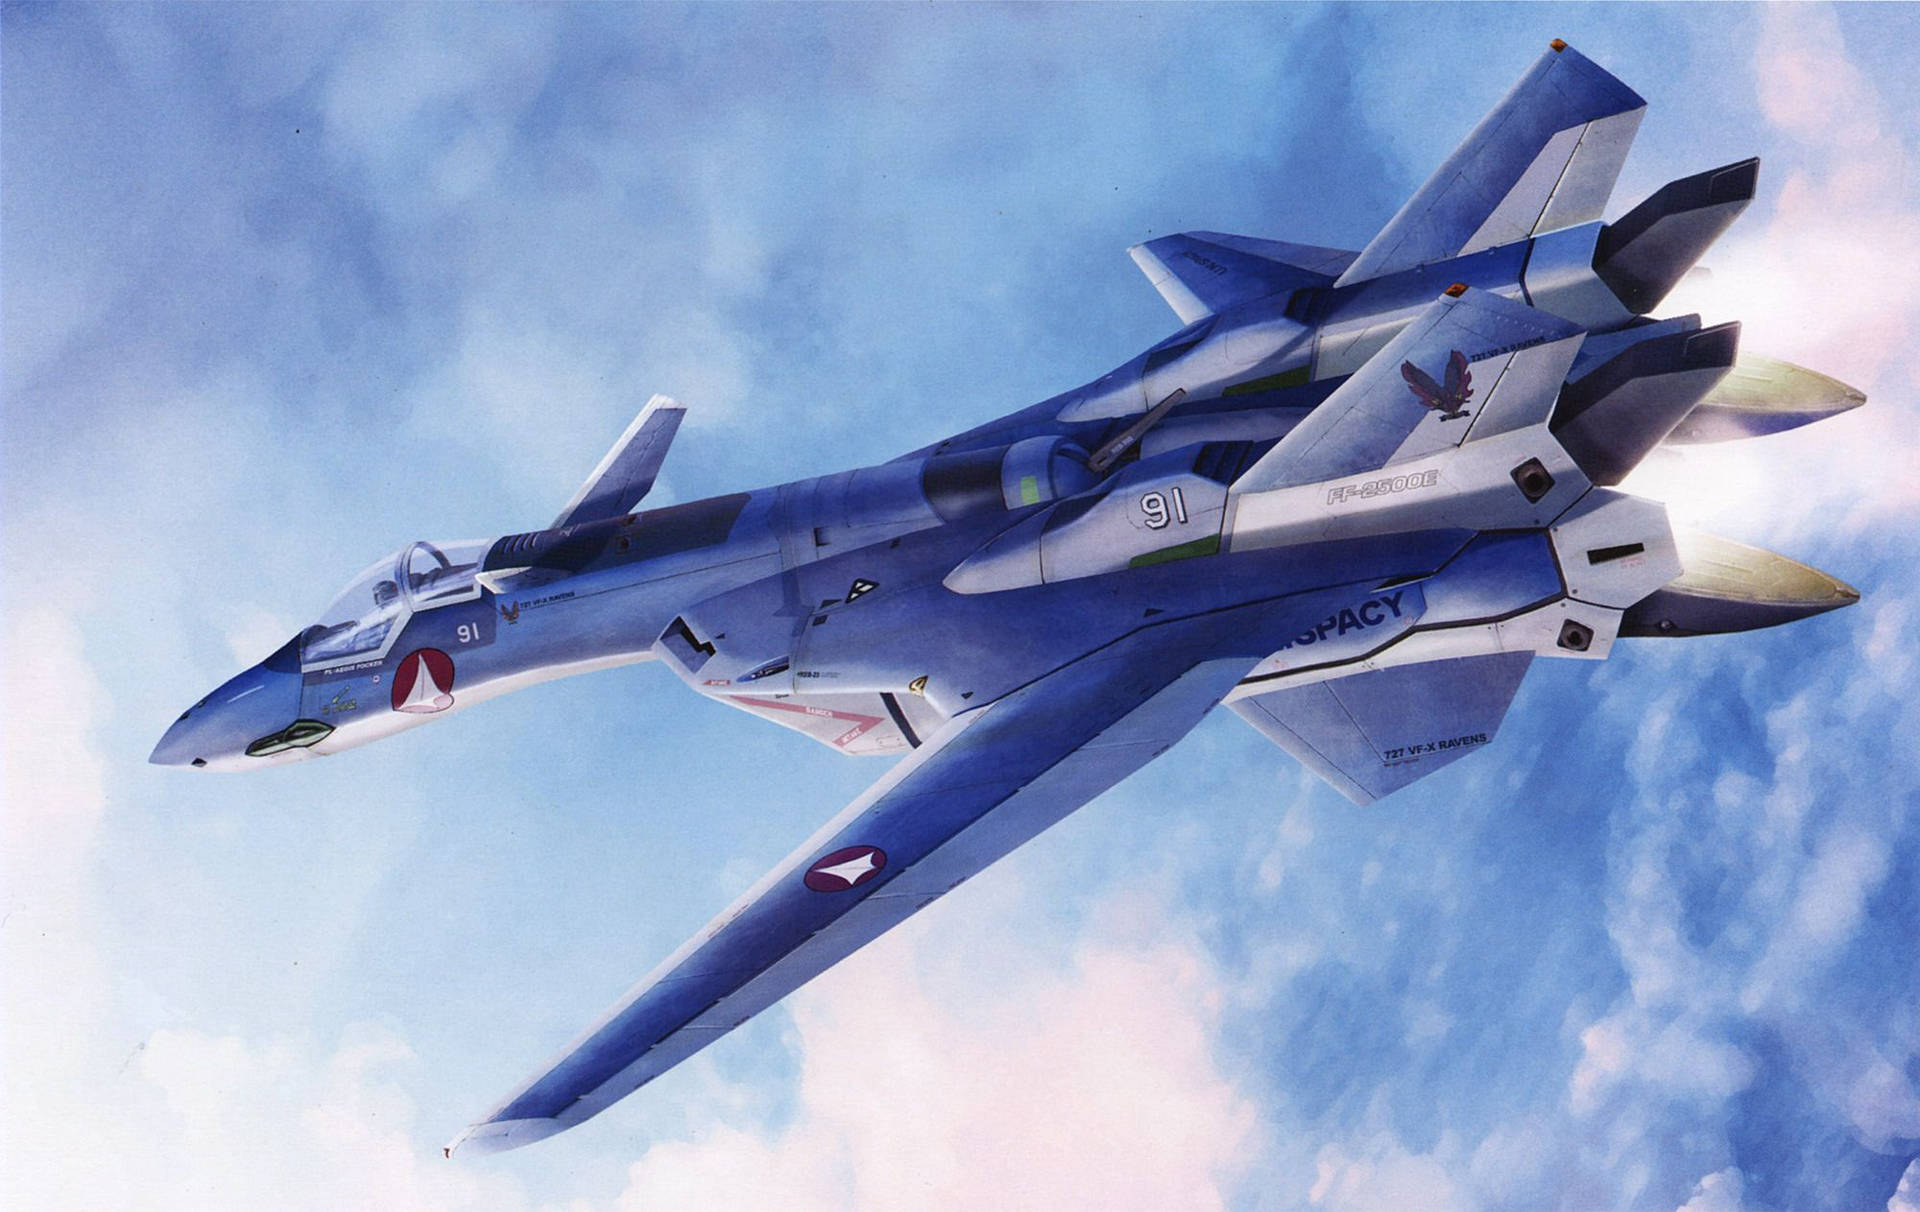 Yf19 Macross Jet Background